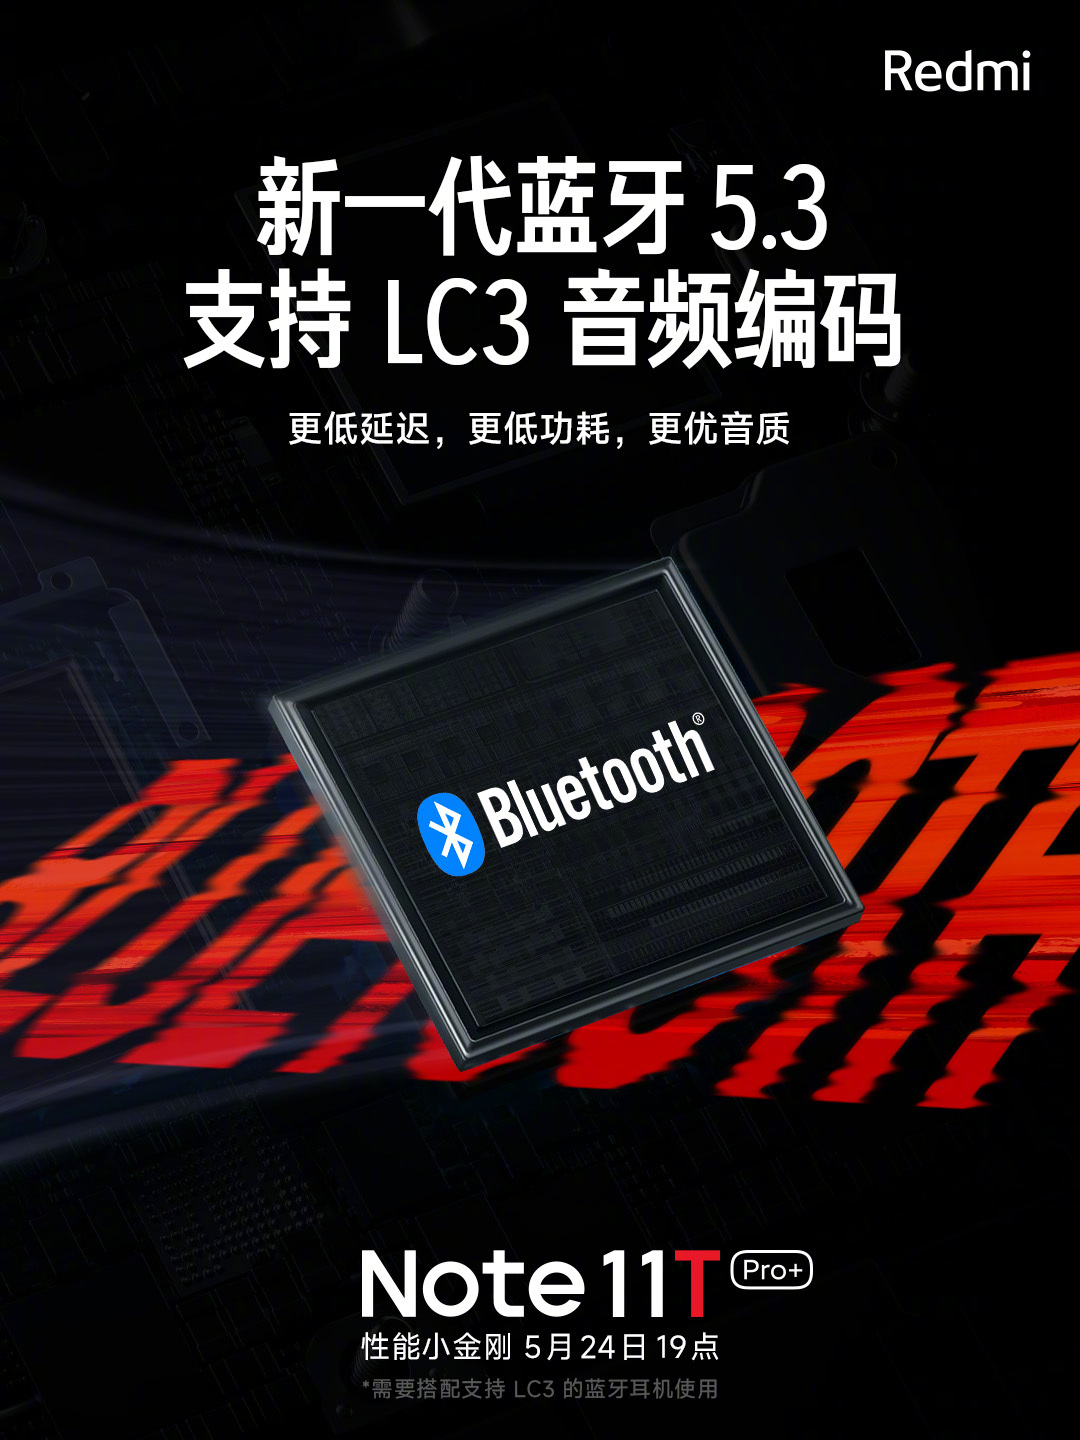 Redmi Note 11T Pro Plus Bluetooth 5.3